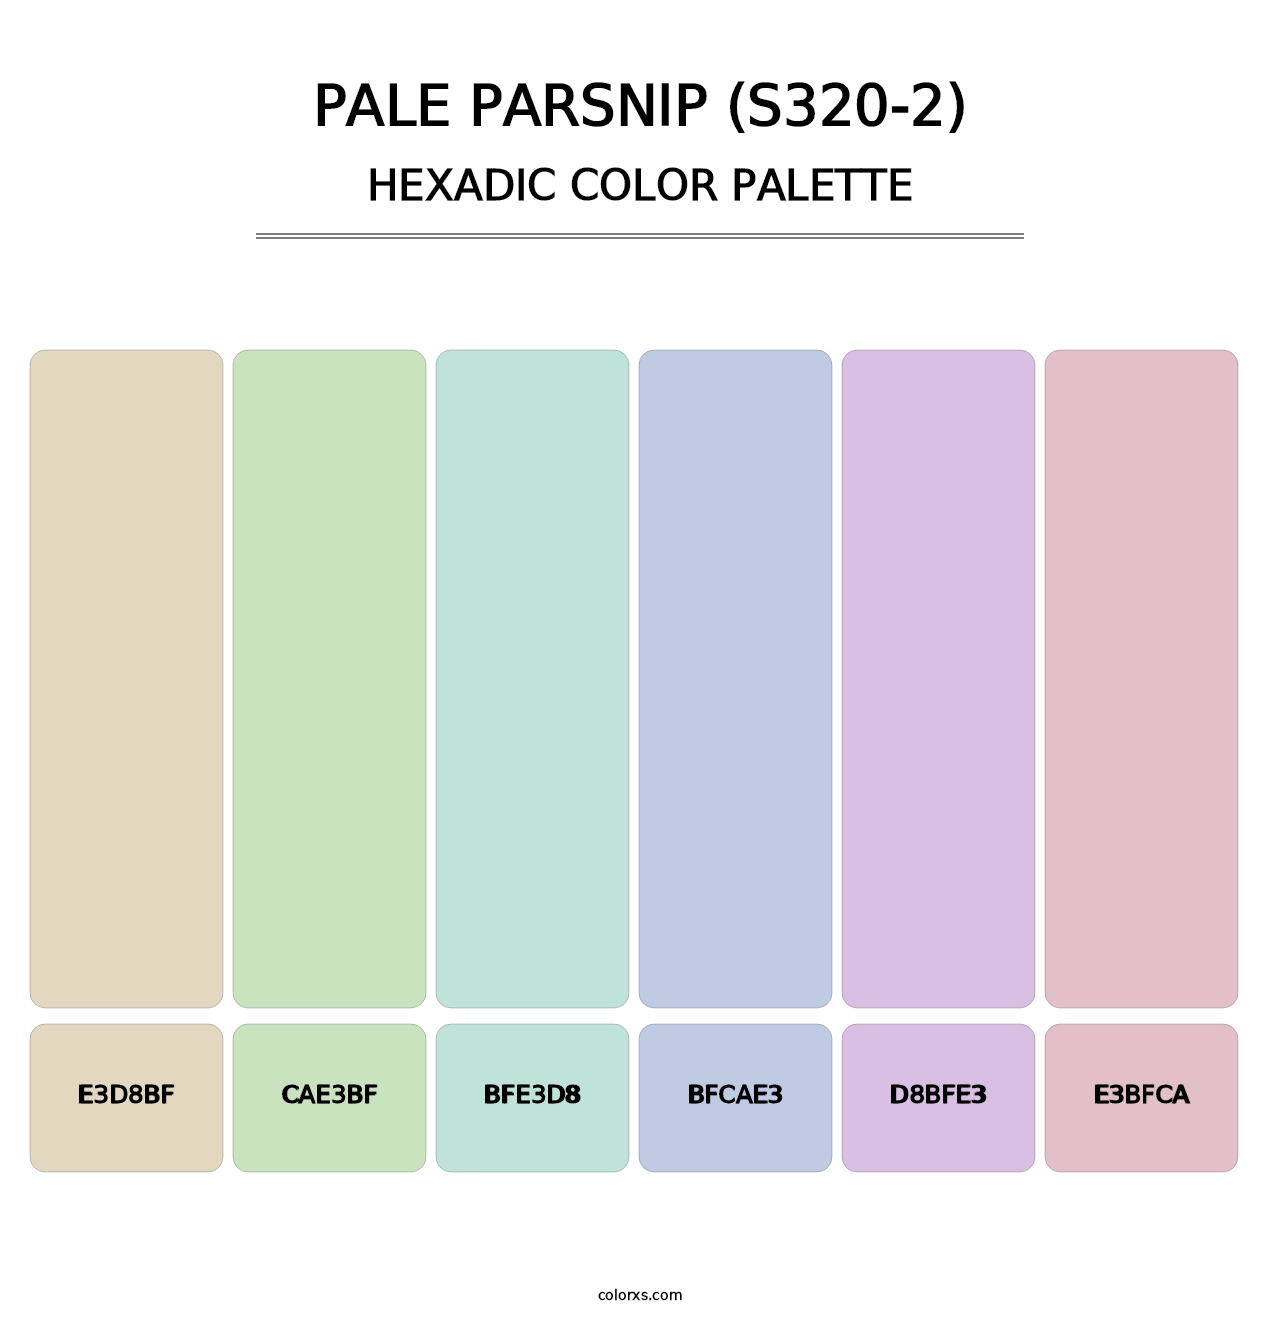 Pale Parsnip (S320-2) - Hexadic Color Palette